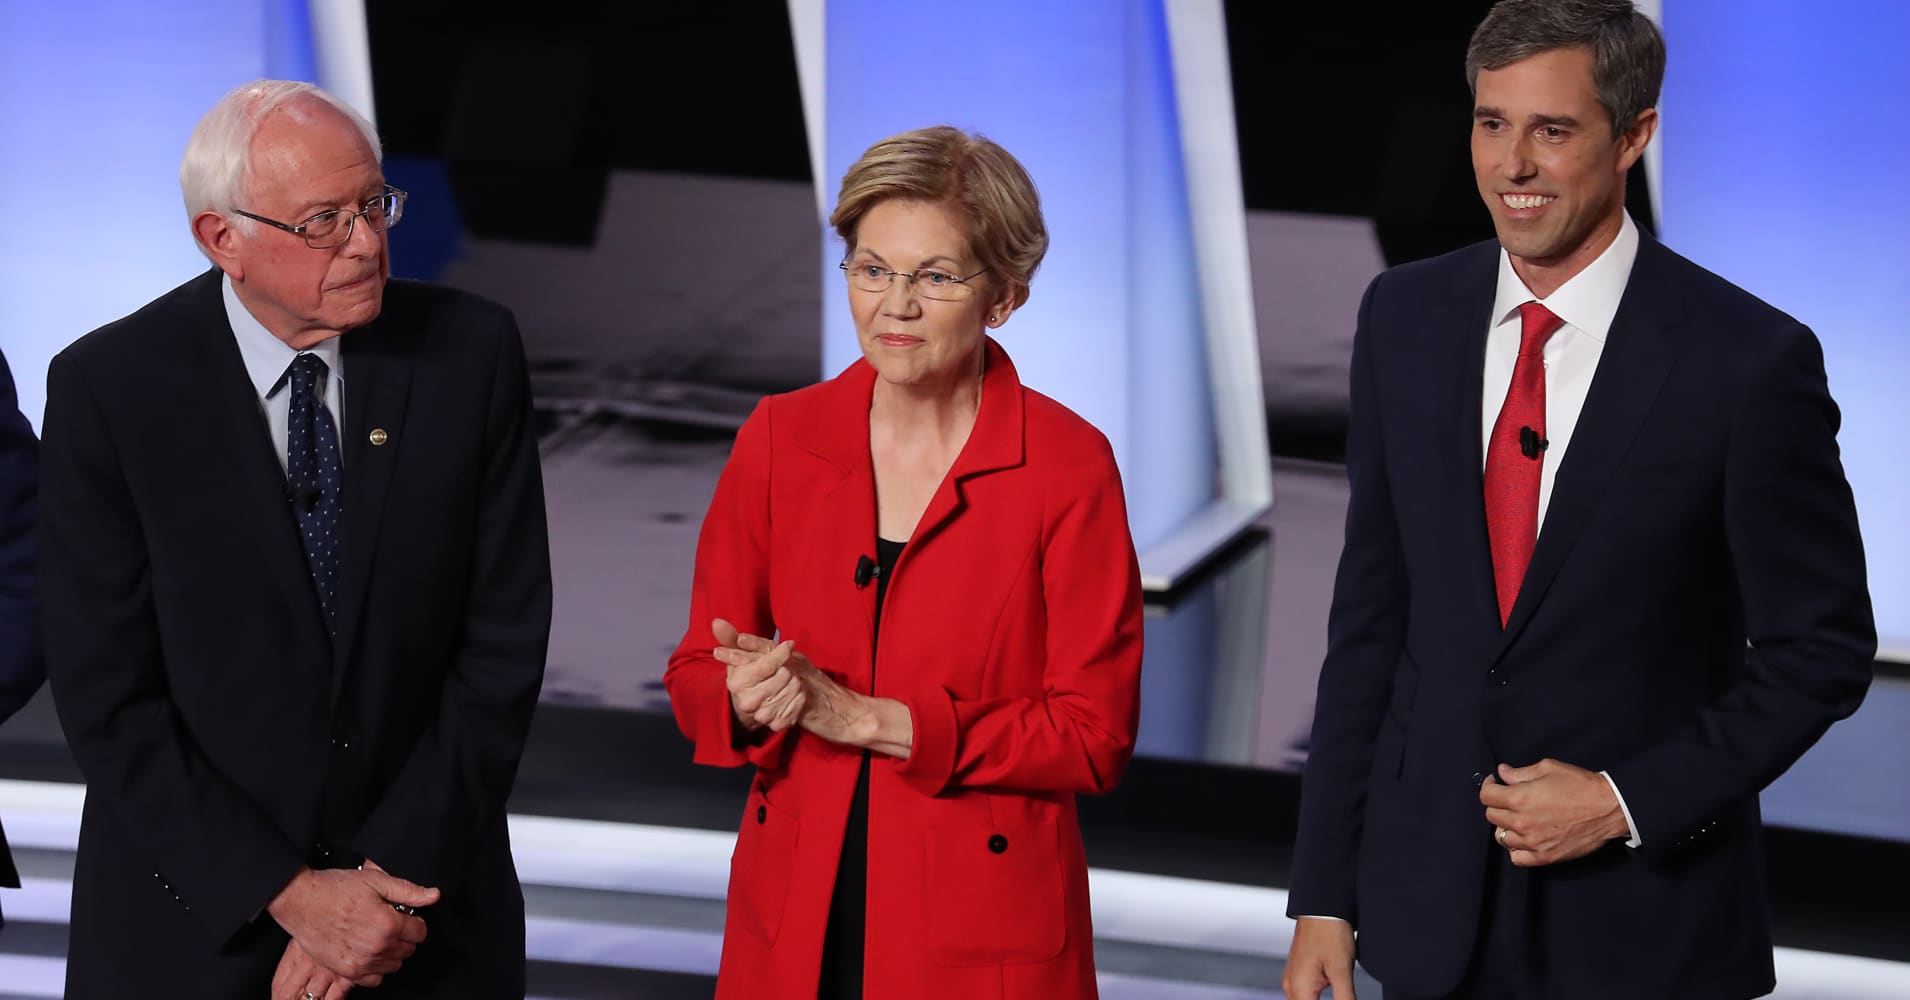 Democratic presidential candidates former Texas congressman Beto O'Rourke (left), Sen. Elizabeth Warren (D-Mass.), and Sen. Bernie Sanders (I-Vt.) take the stage at the Democratic Presidential Debate in Detroit, Michigan.